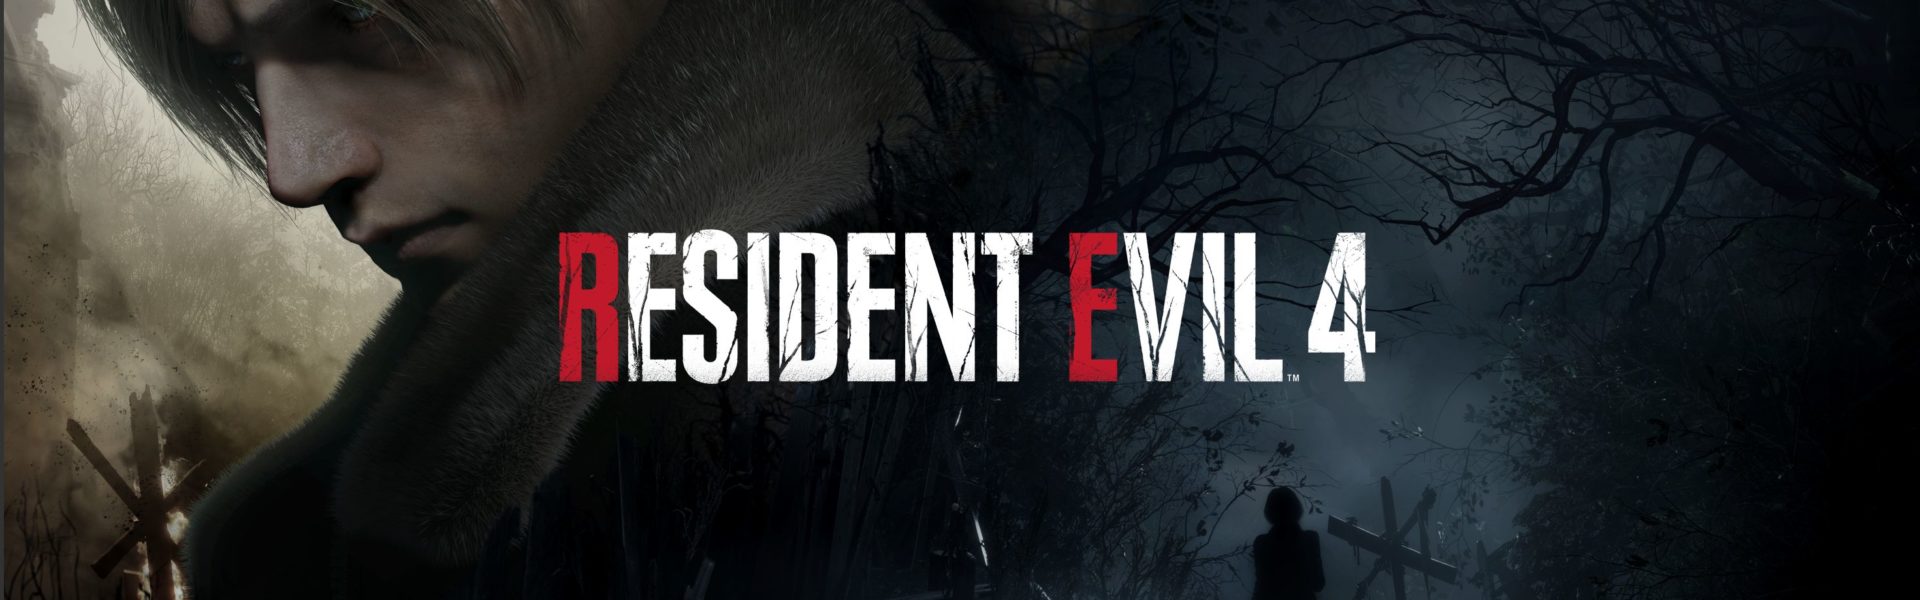 Resident Evil 4 – Das sagt die Presse